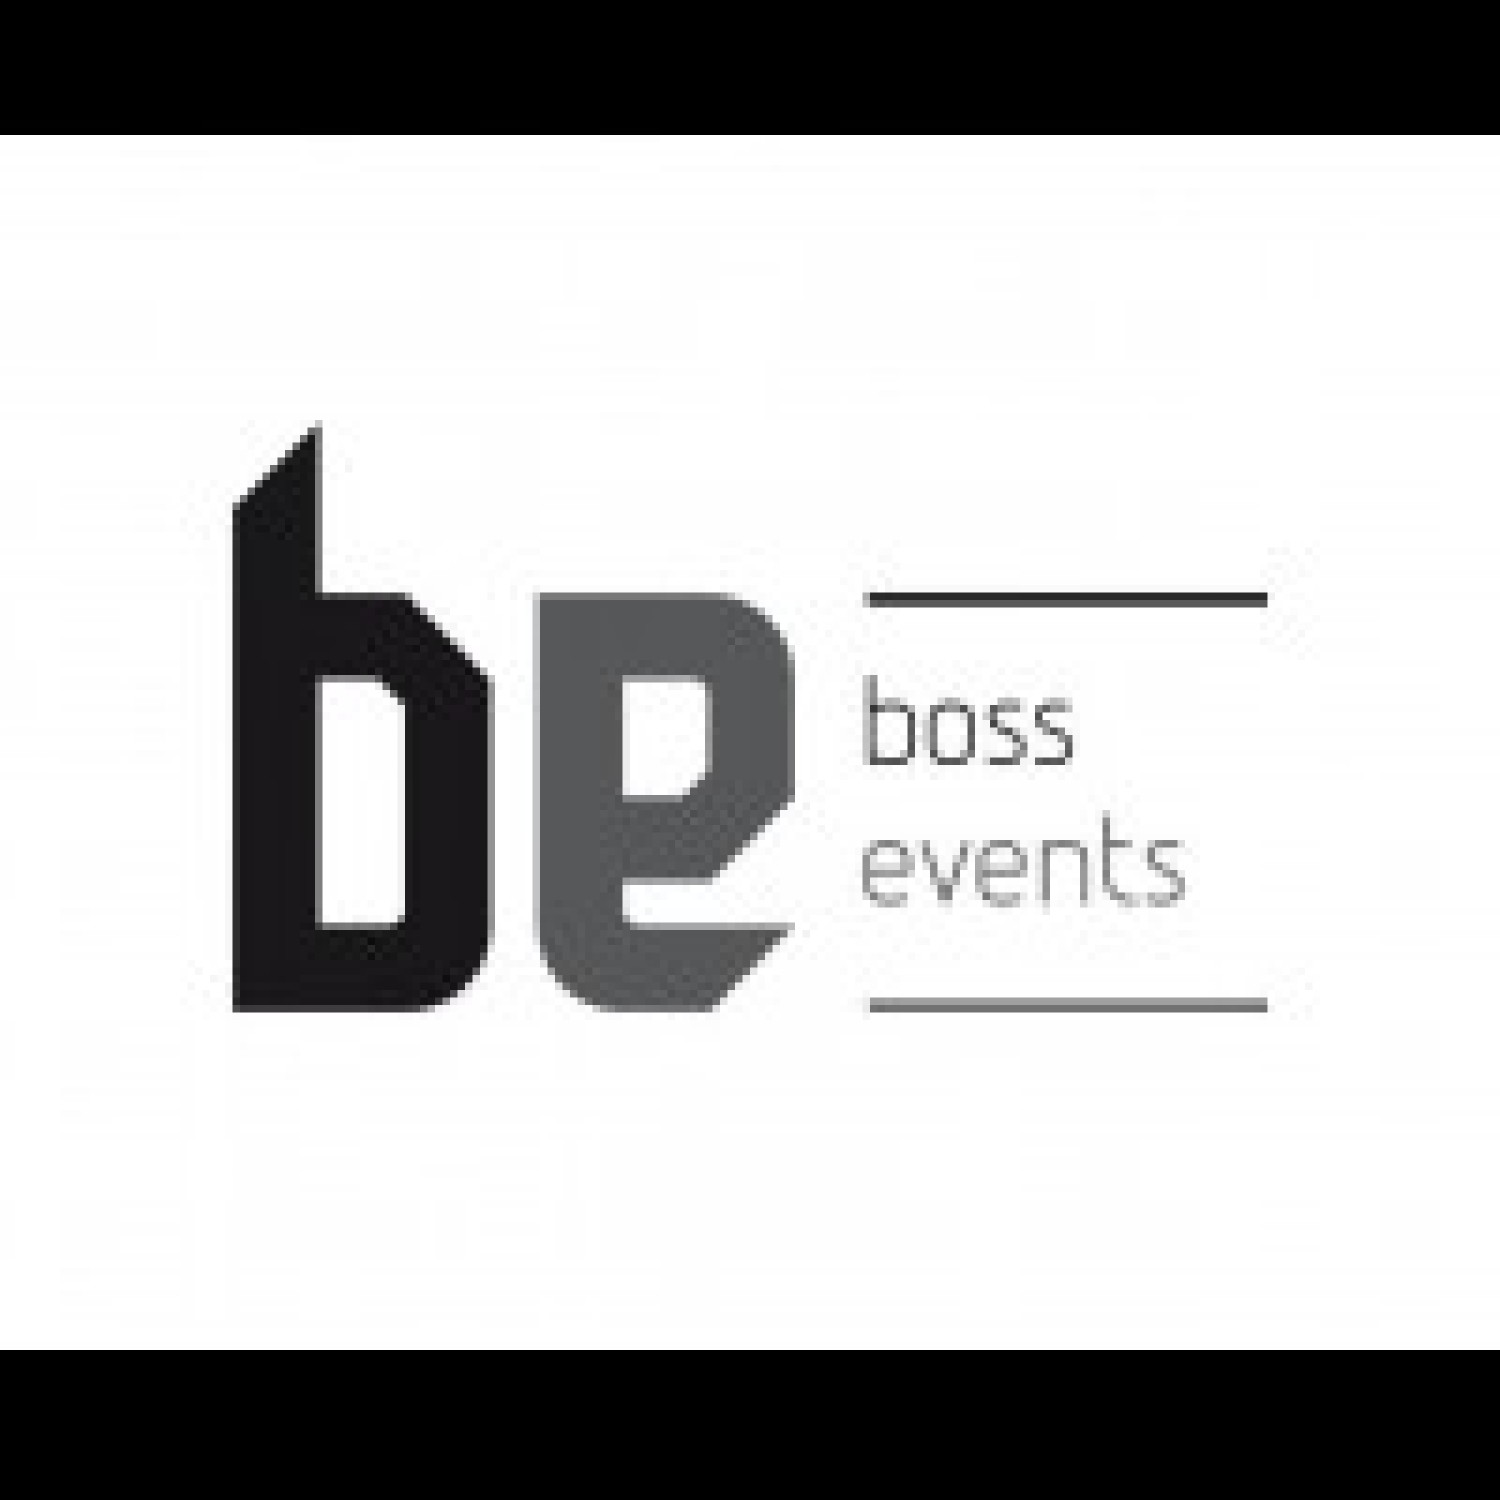 Boss Events